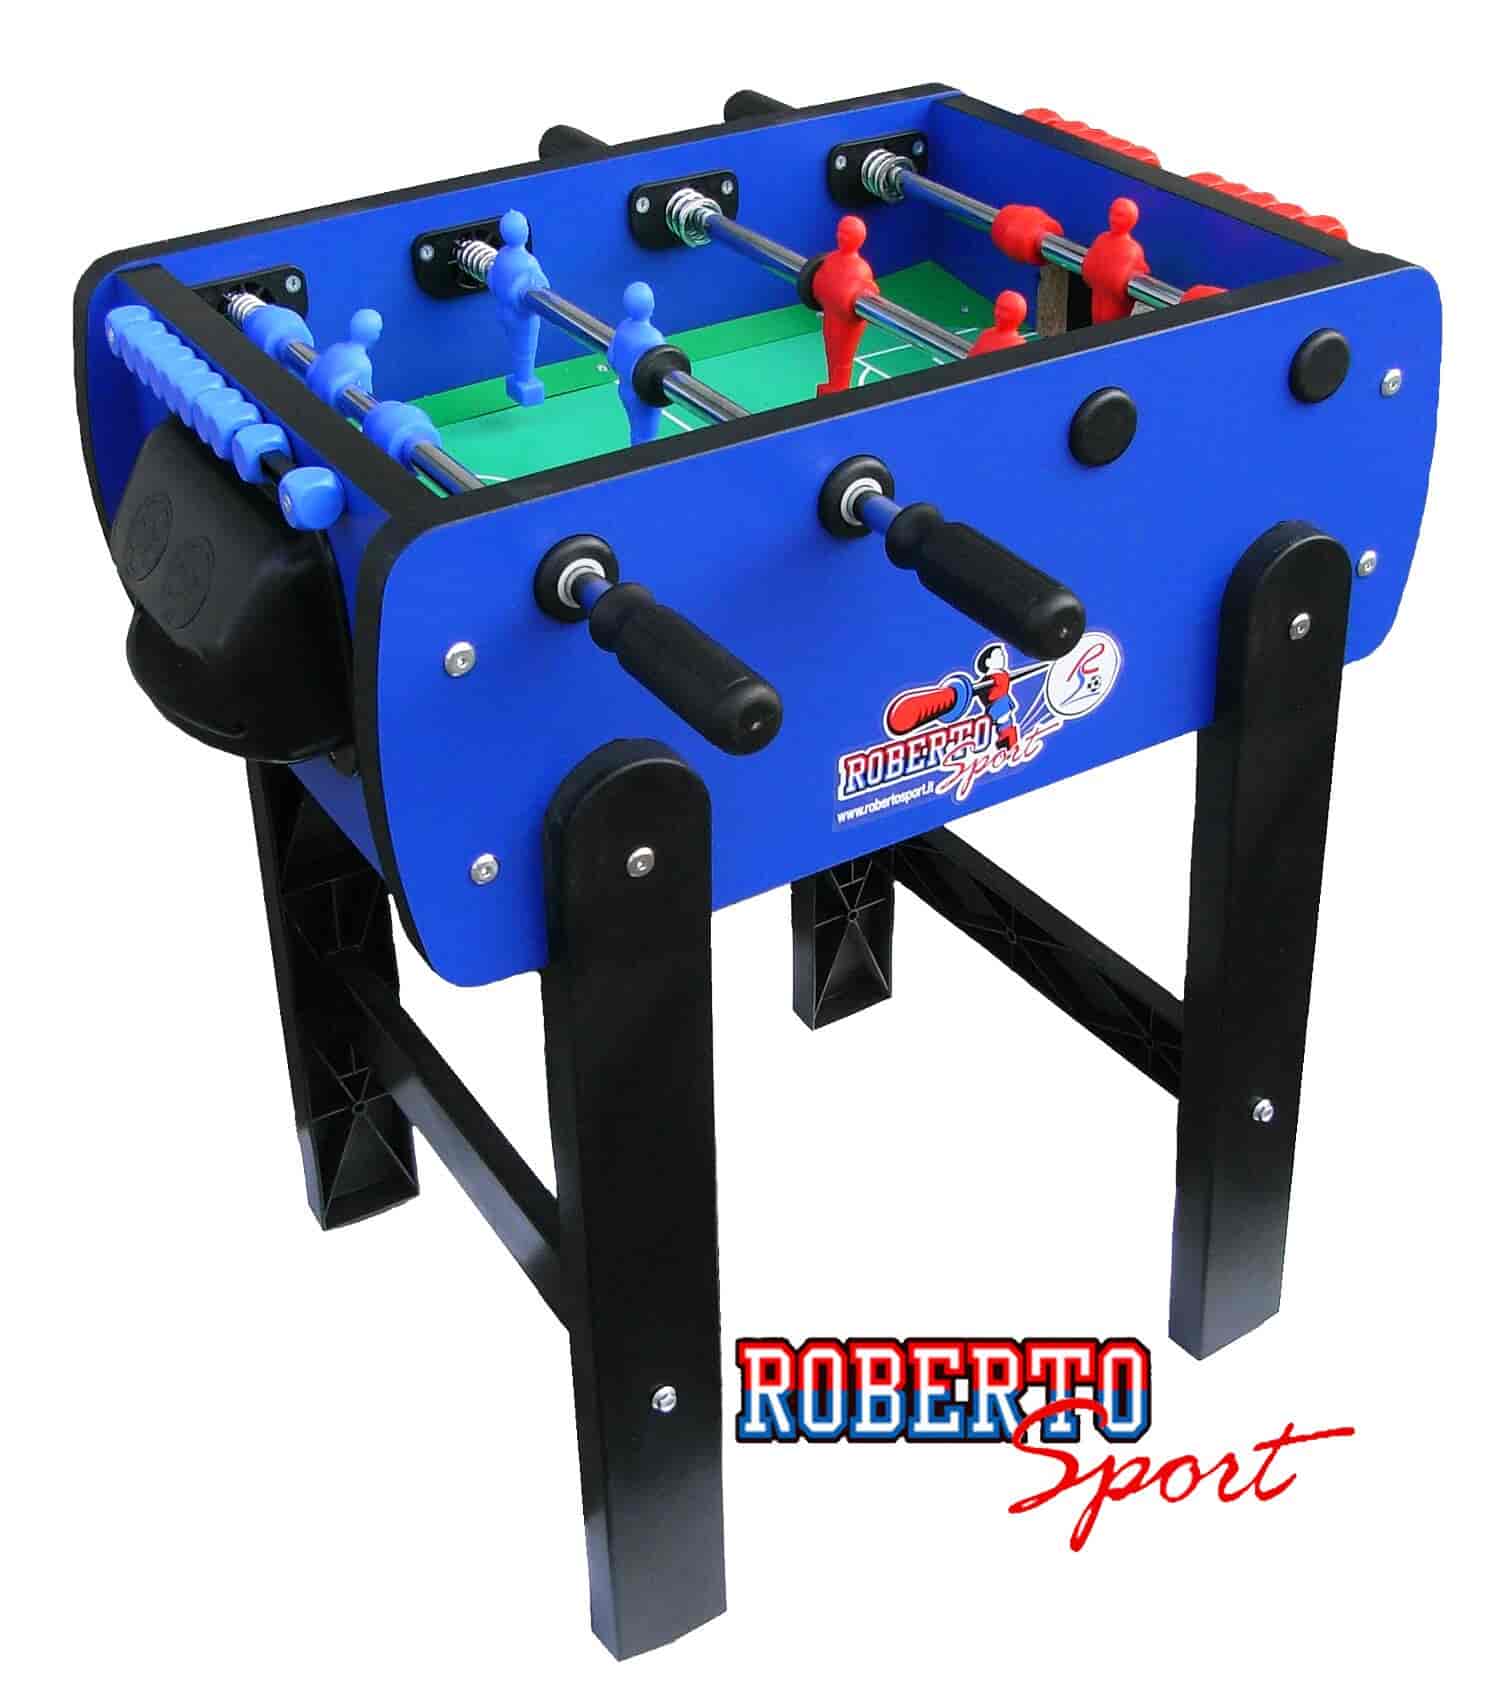 Baby Foot Roberto Sport Roby Color (à 2 barres)